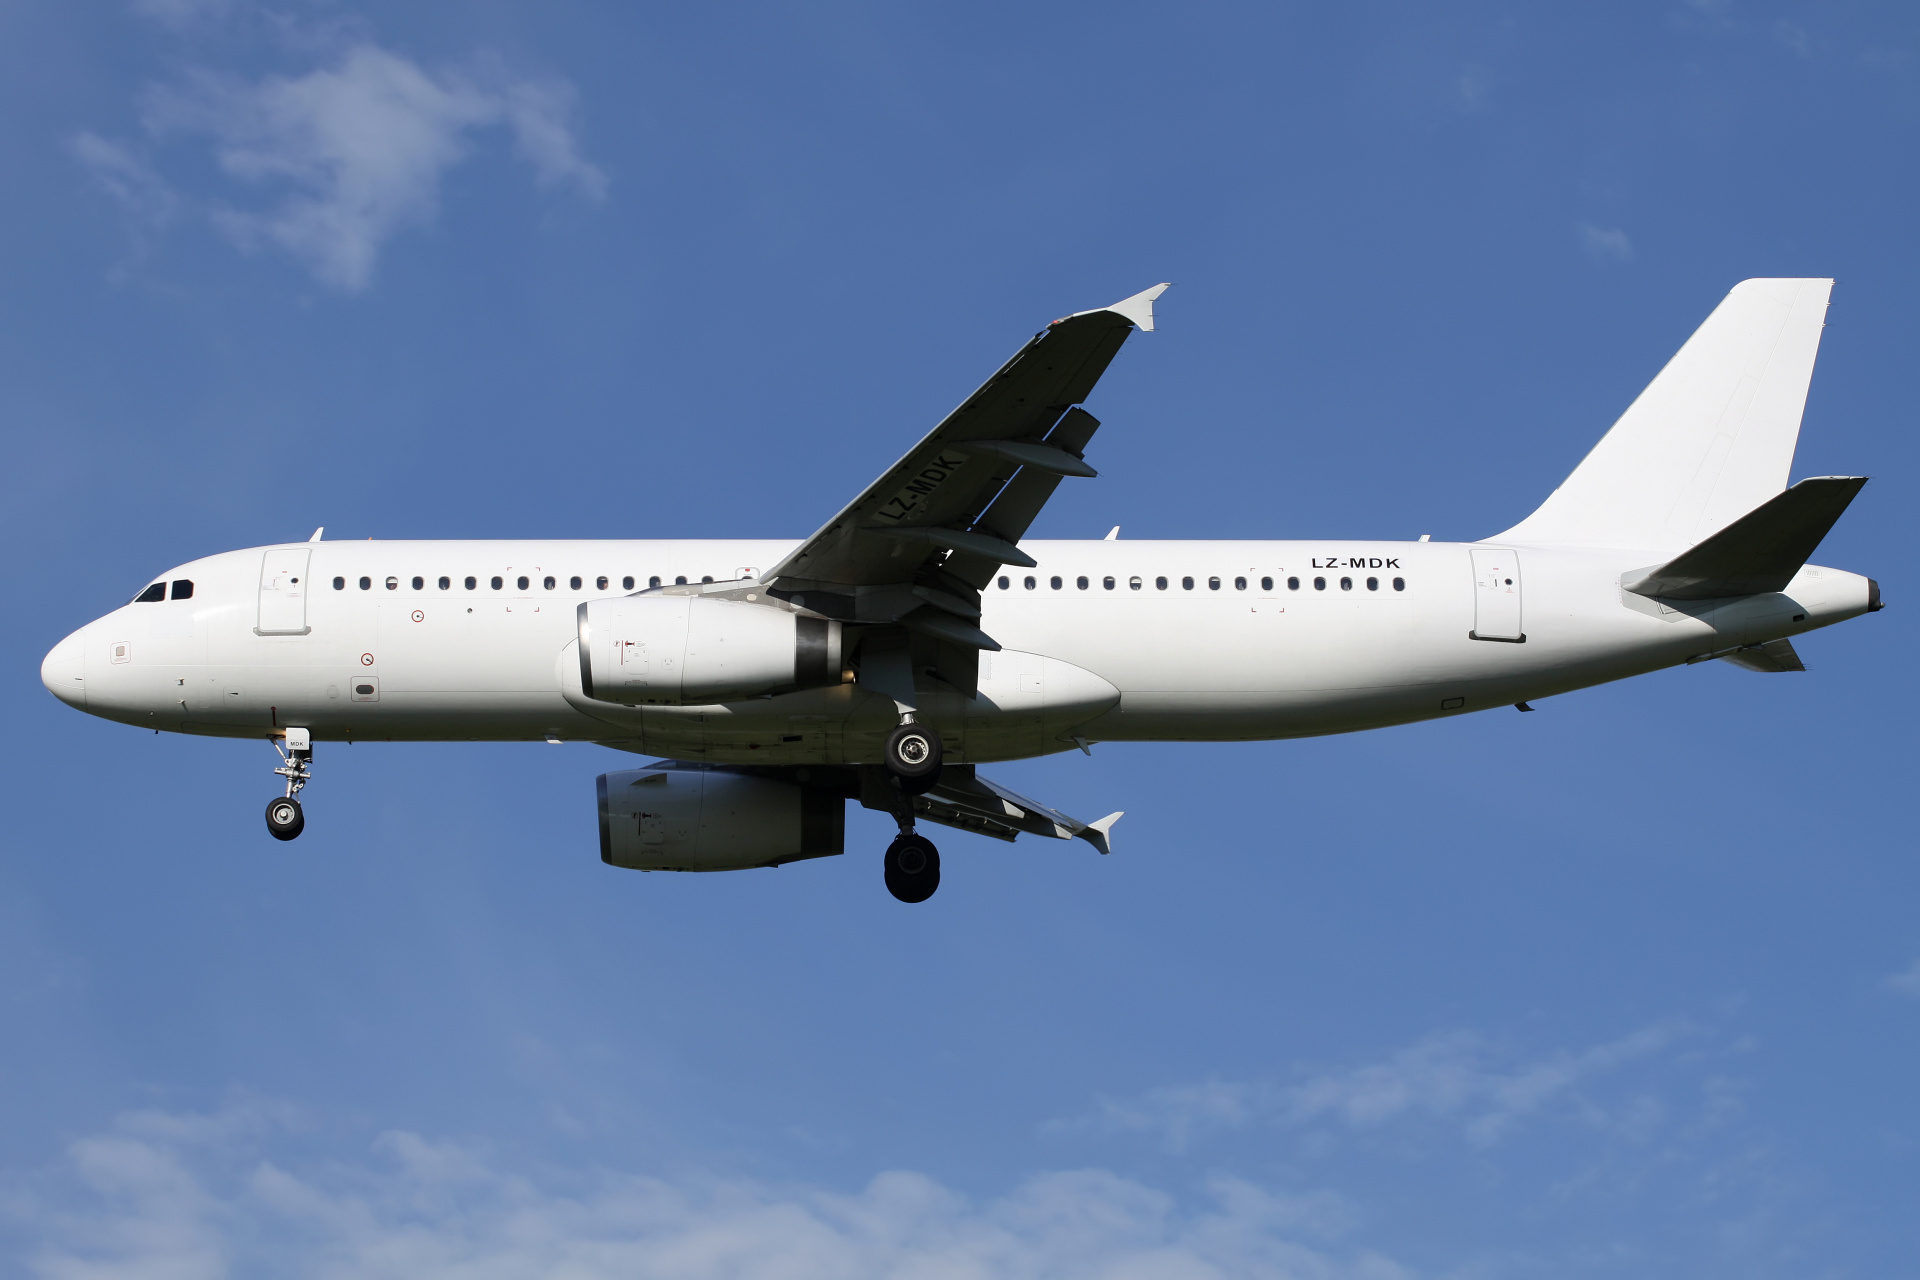 LZ-MDK, VIA Airways (Aircraft » EPWA Spotting » Airbus A320-200)